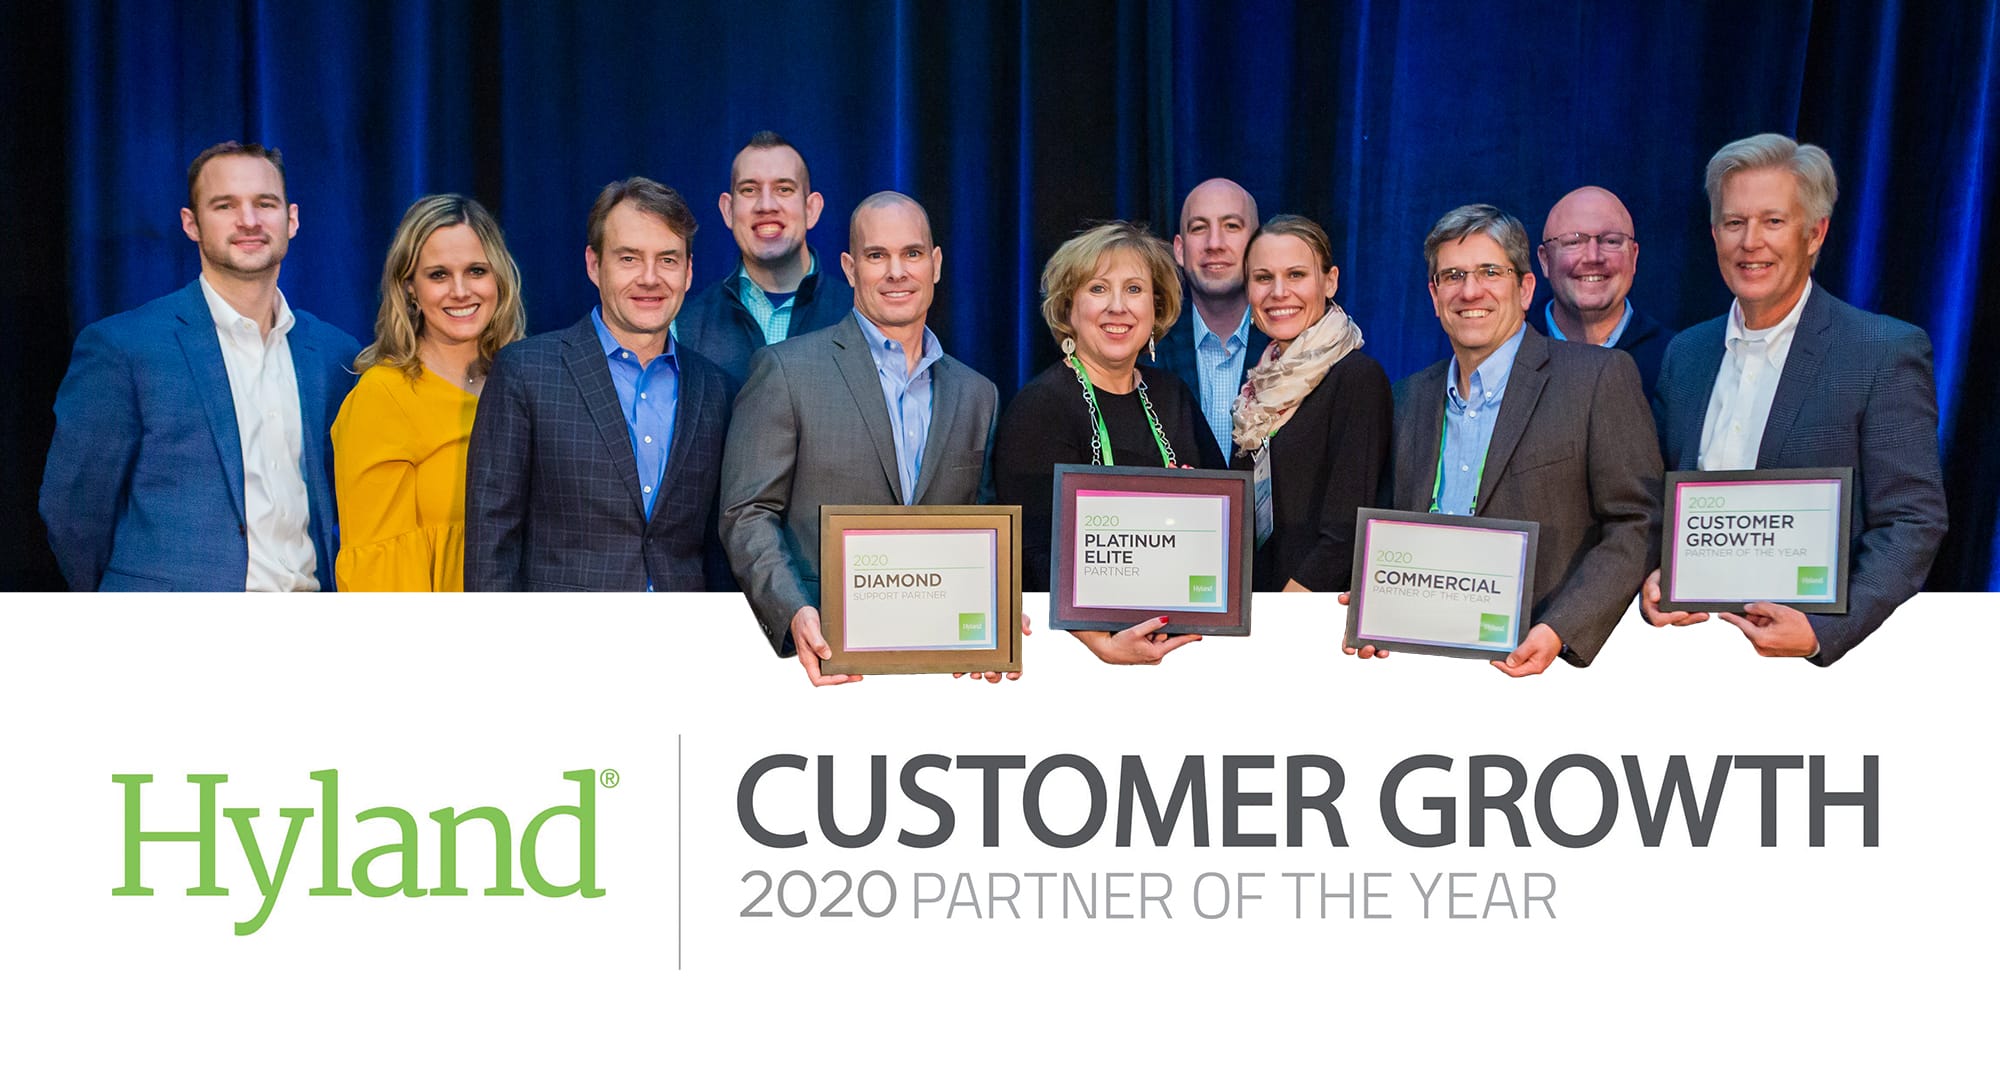 Hyland Customer Growth Partner of the Year Award